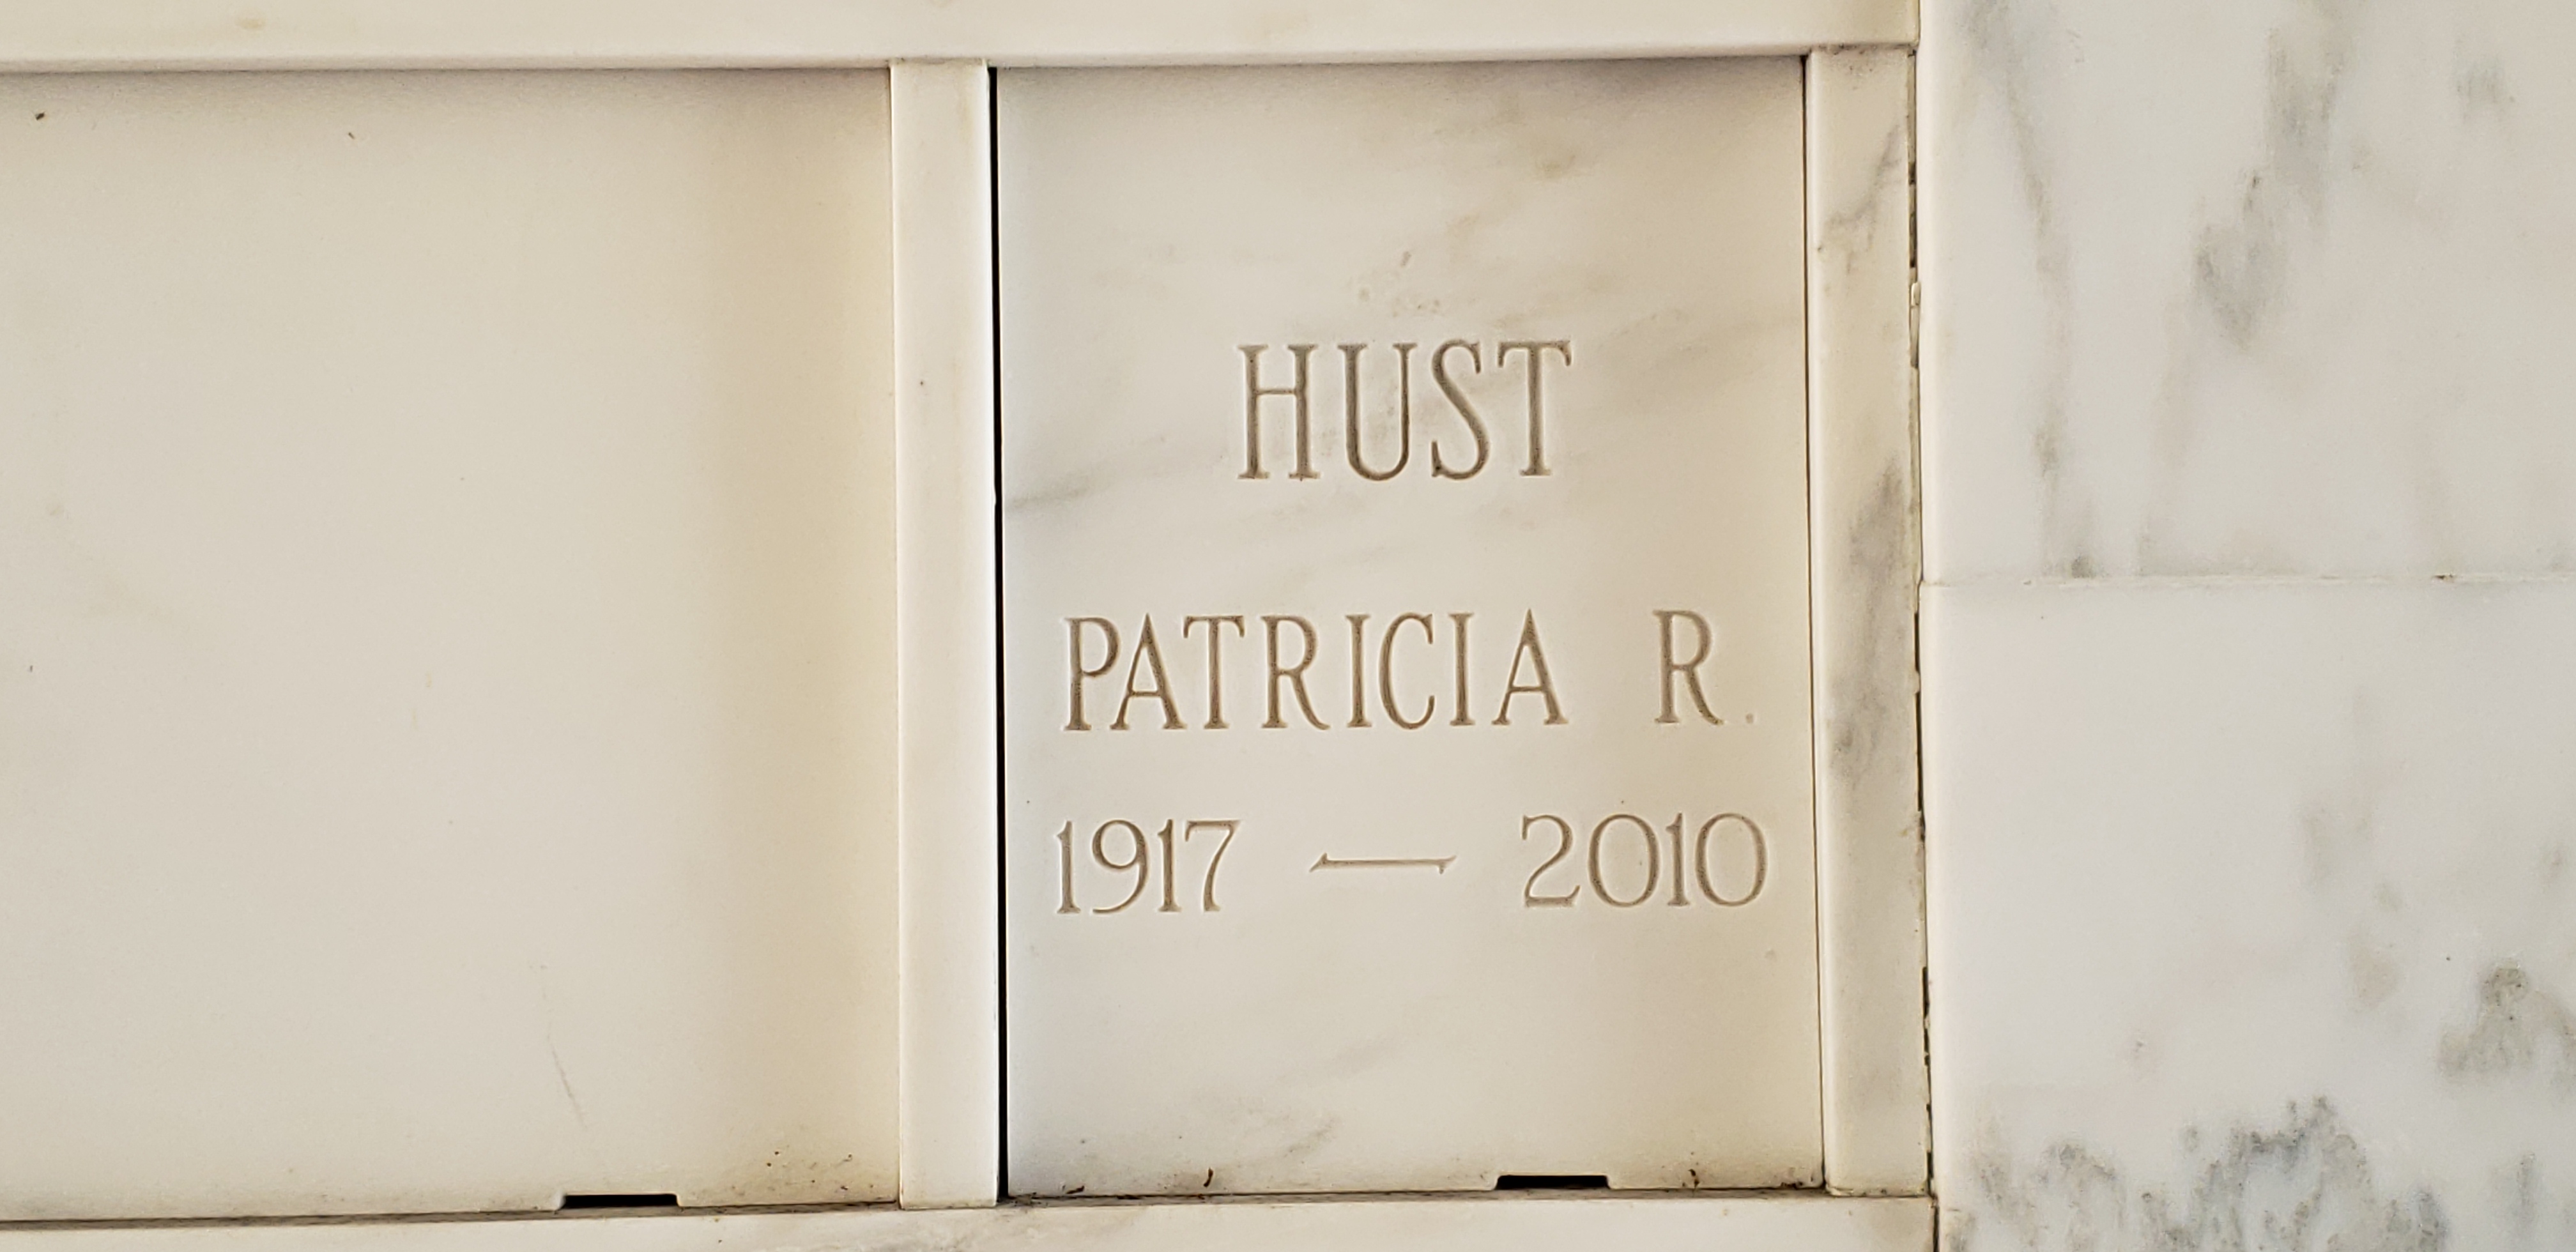 Patricia R Hust